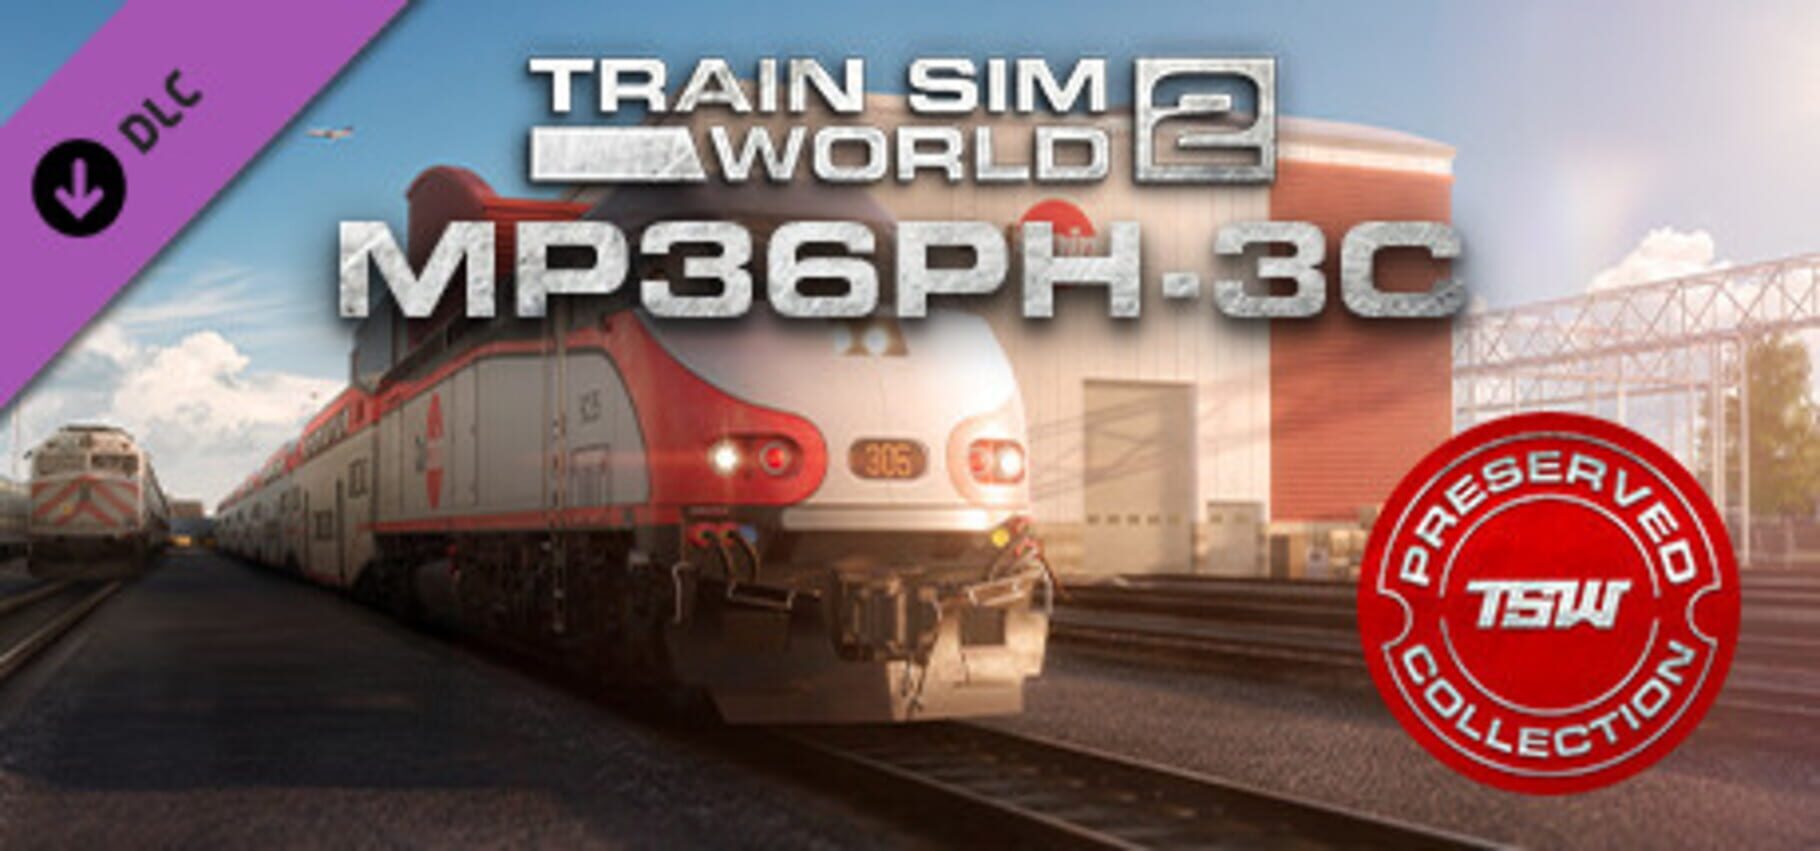 Train Sim World 2: Caltrain MP36PH-3C ‘Baby Bullet’ Loco